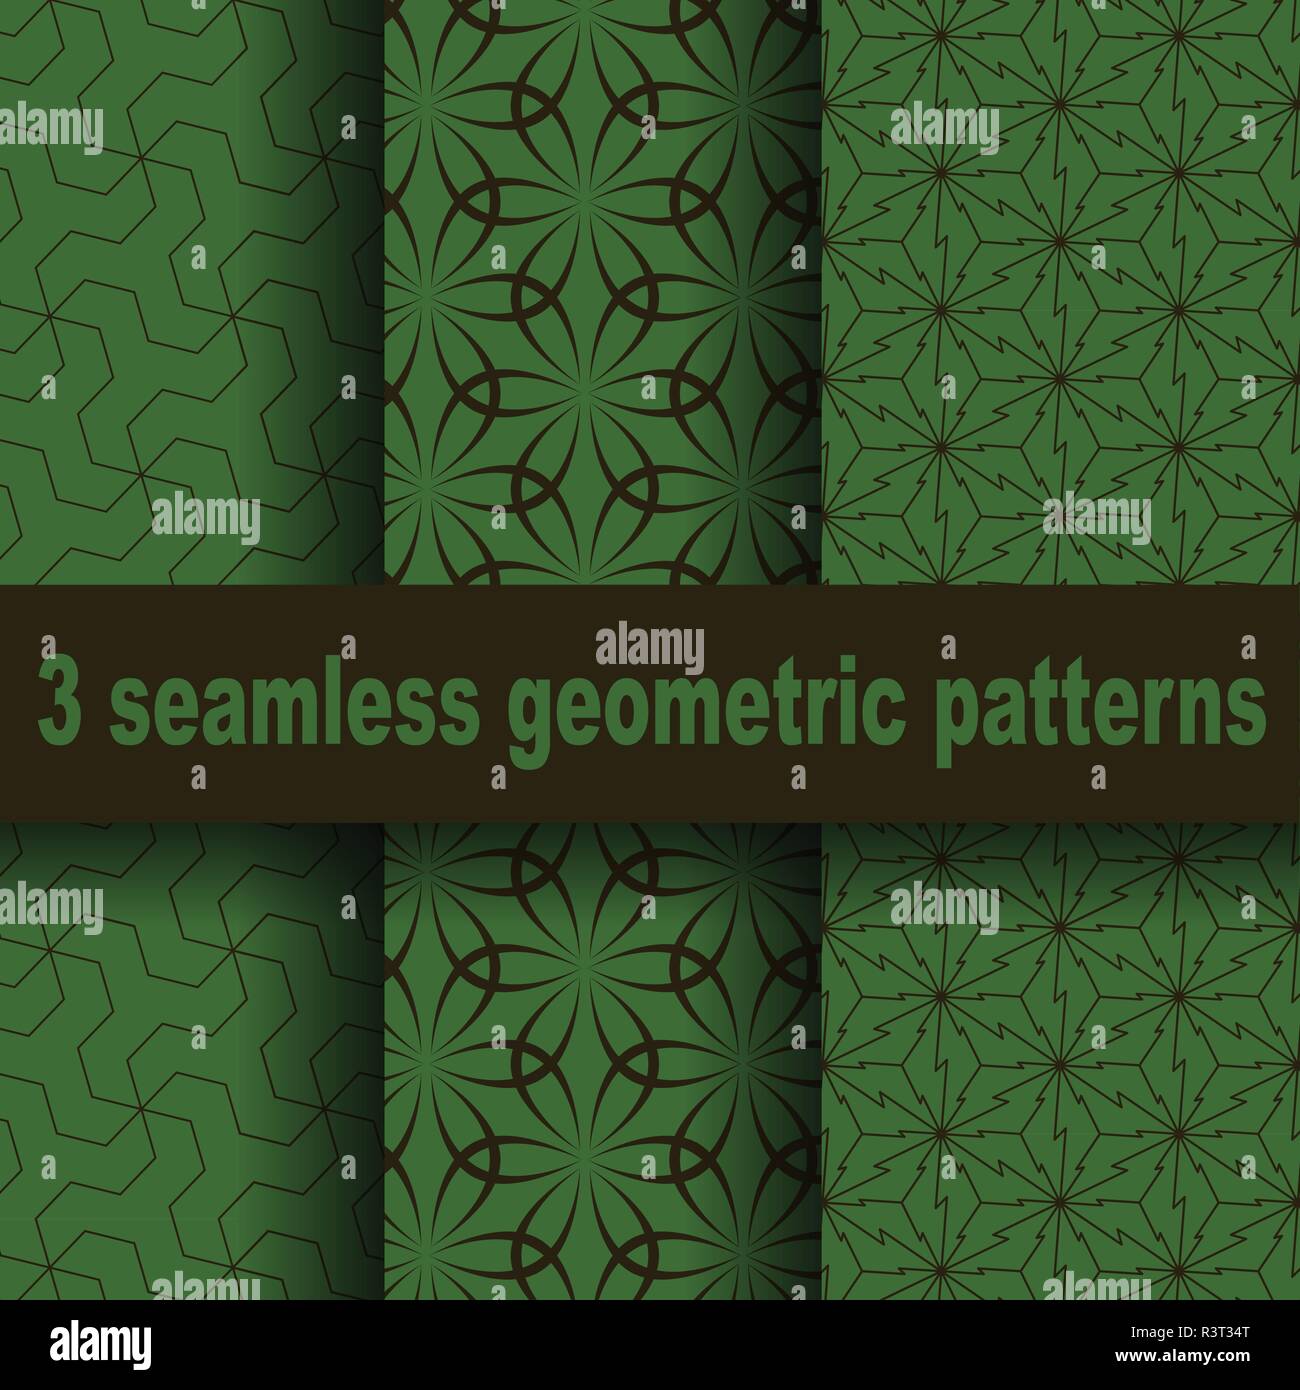 3 seamless geometric patterns. Stock Vector